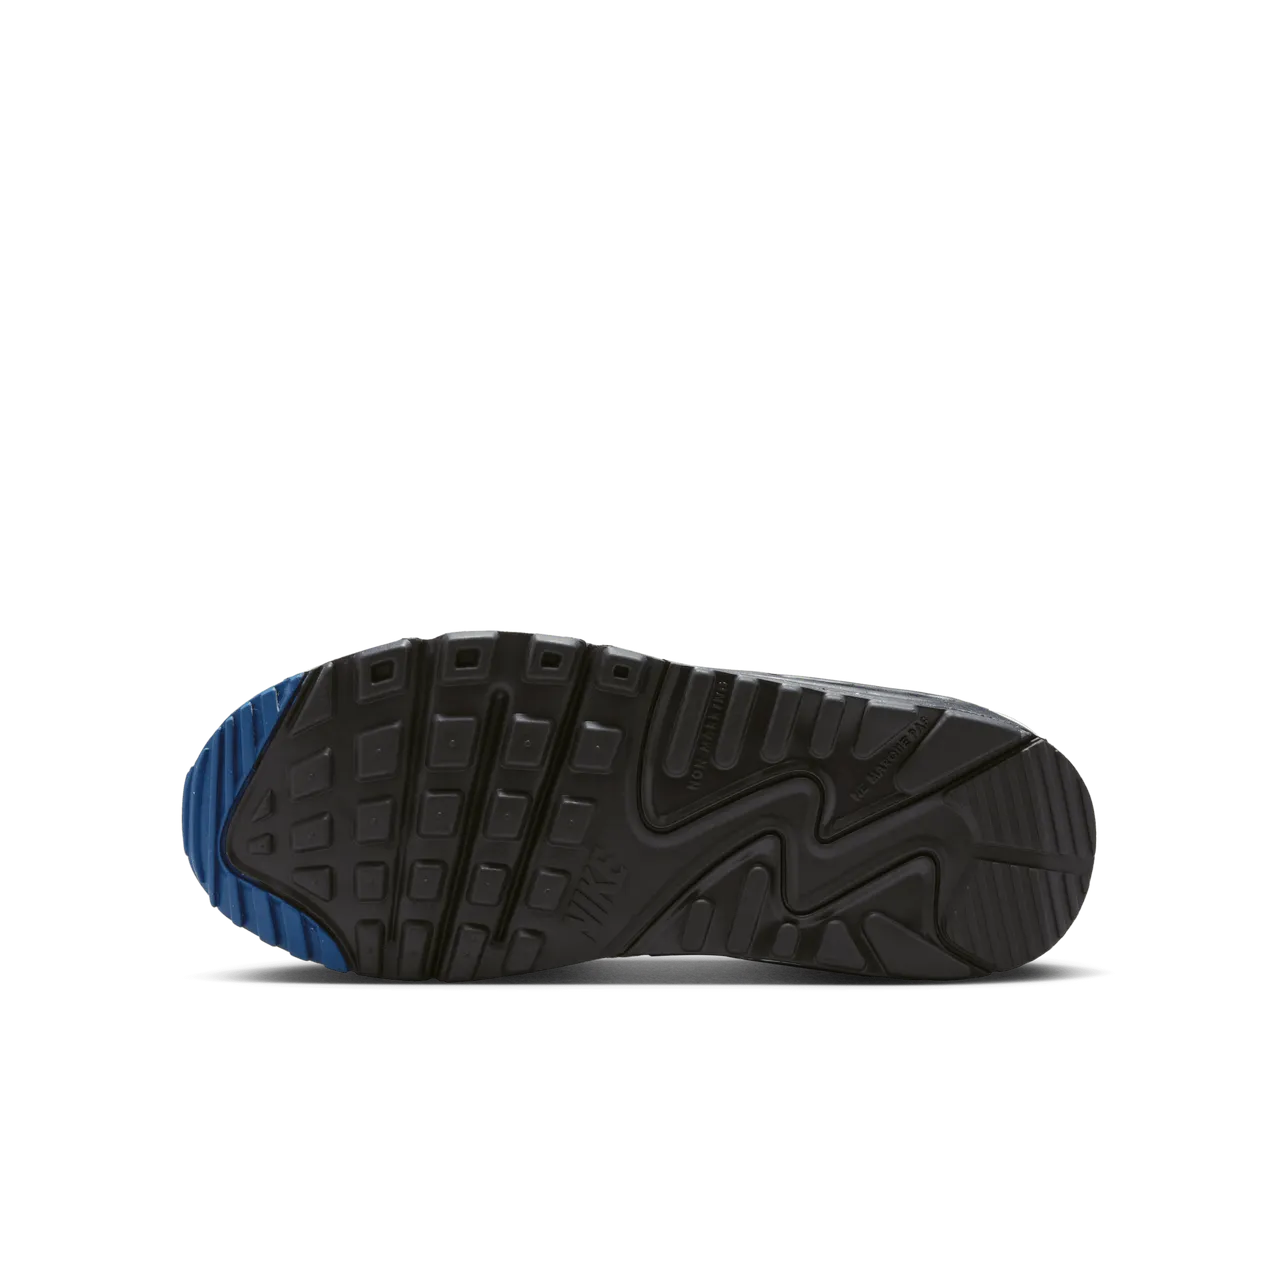 Nike Air Max 90 Older Kids' Shoe - Black